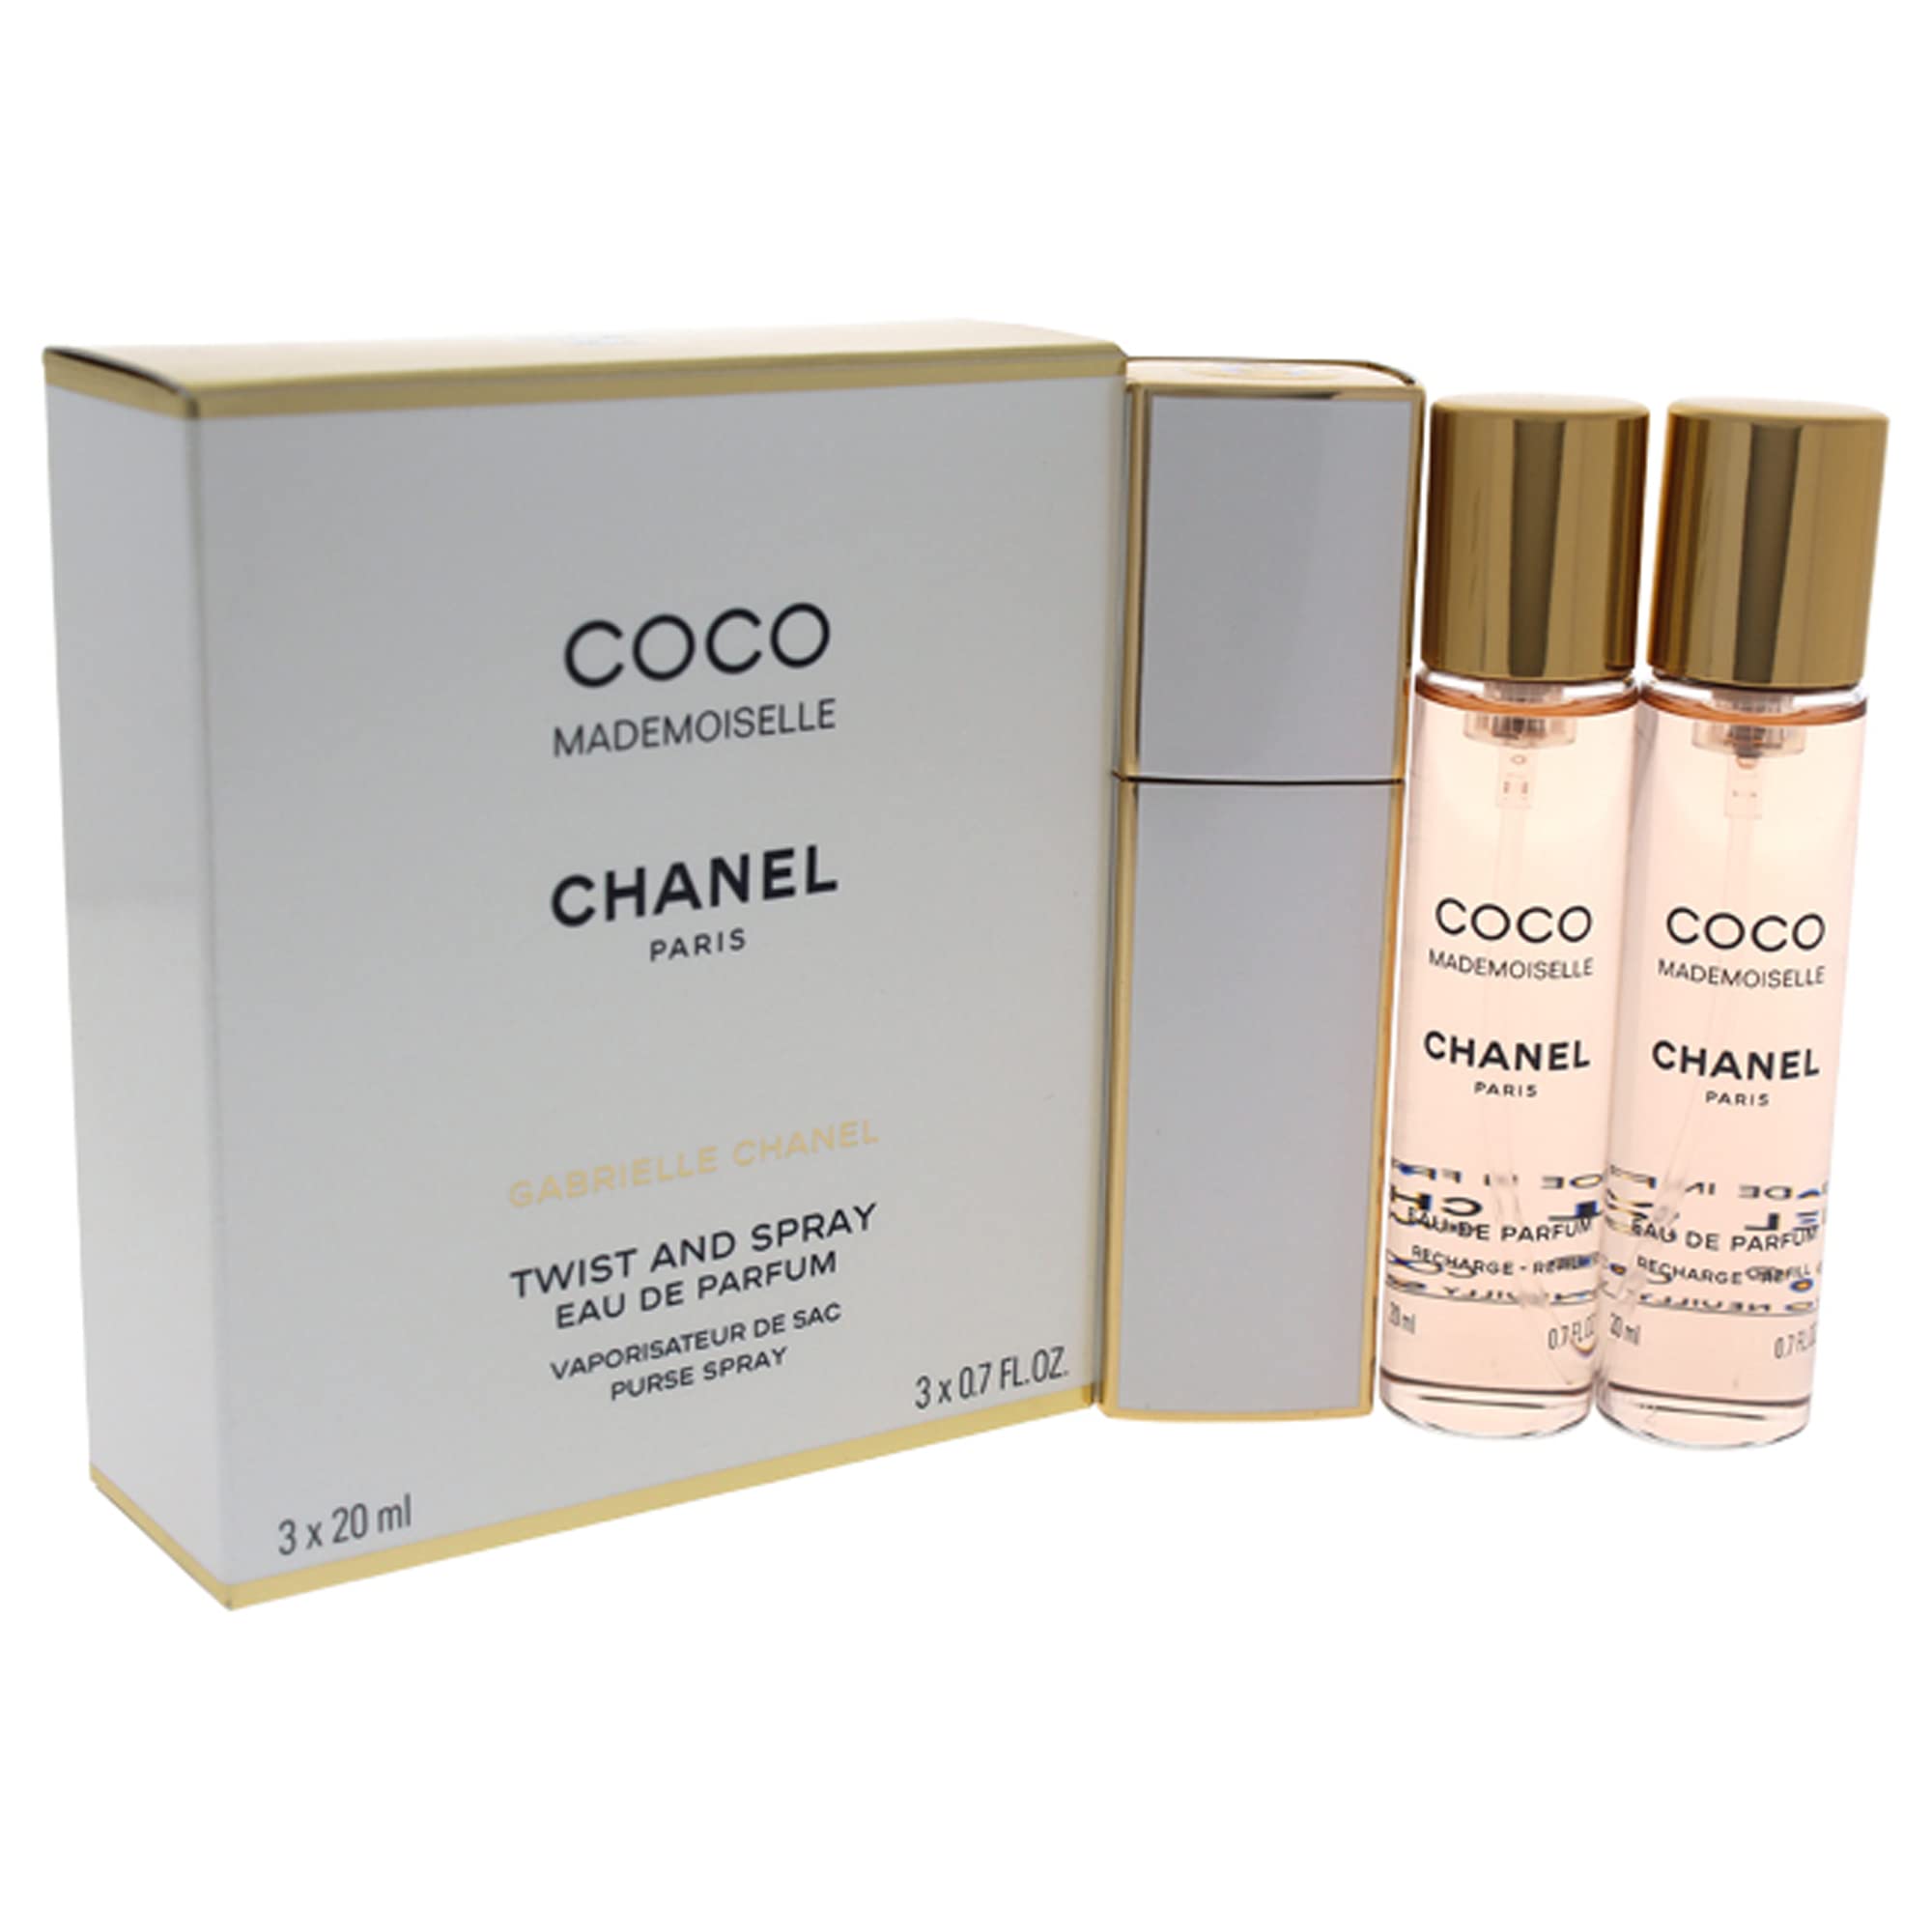 Chanel Coco Mademoiselle Eau De Parfum Spray buy to Taiwan CosmoStore  Taiwan